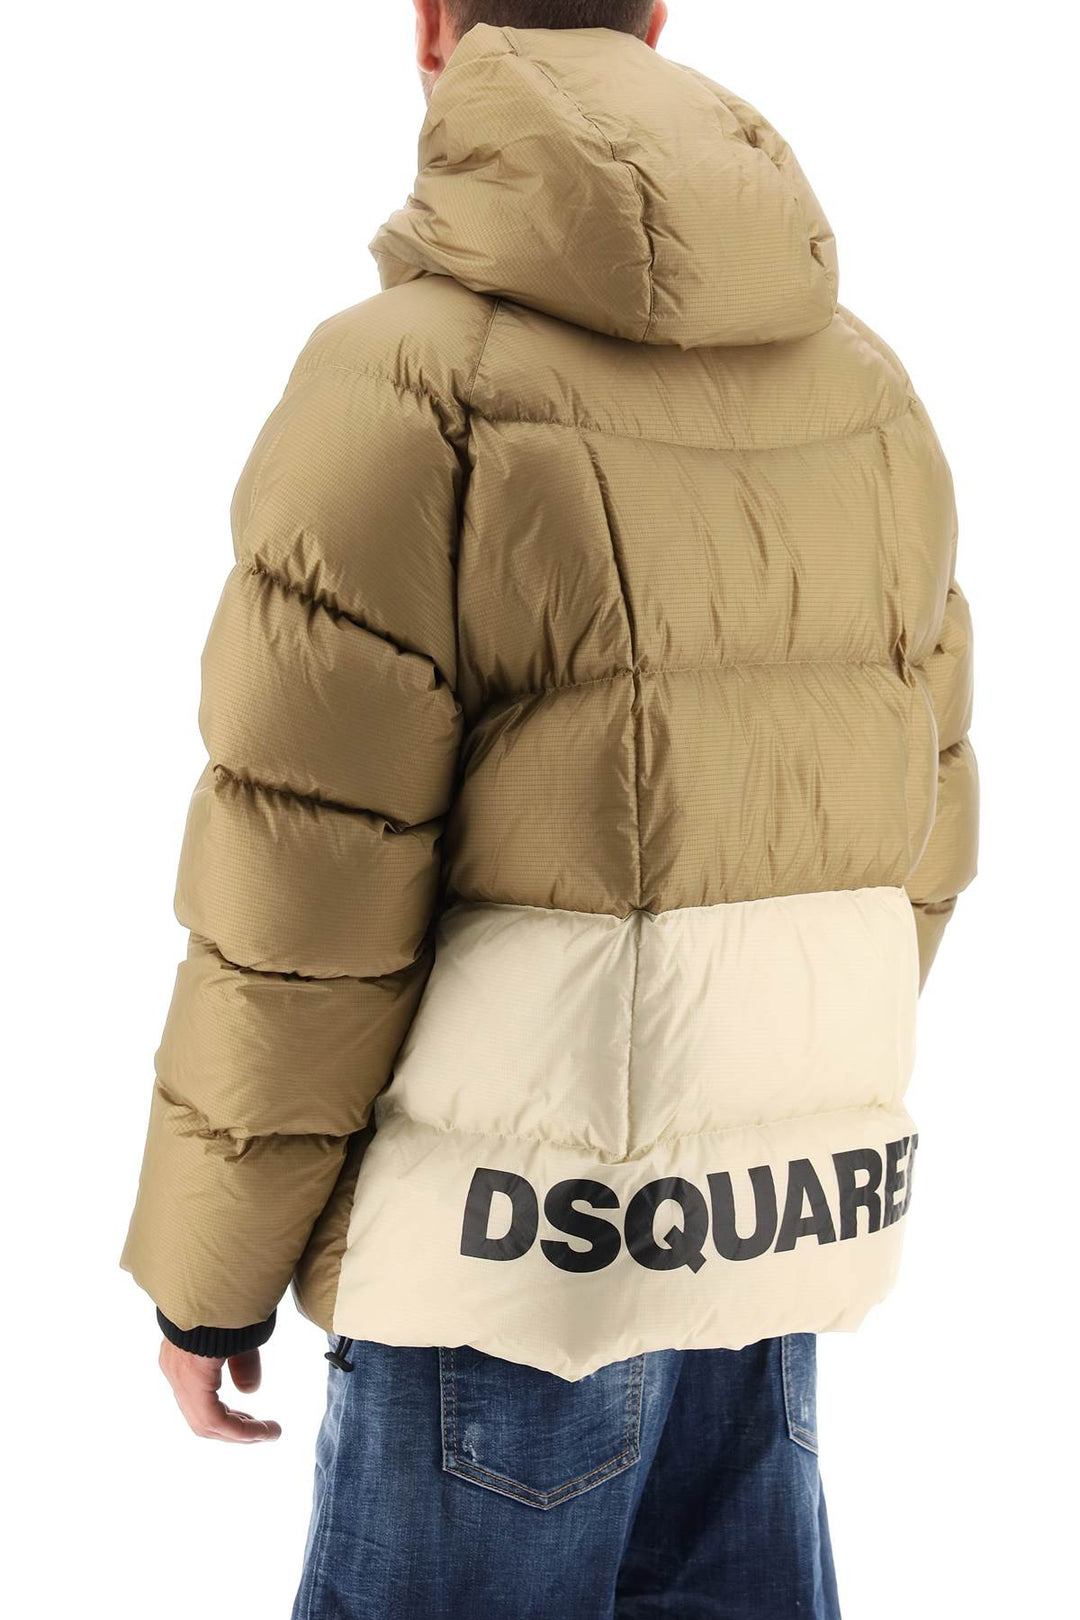 Dsquared2 Logo Print Hooded Down Jacket   Beige